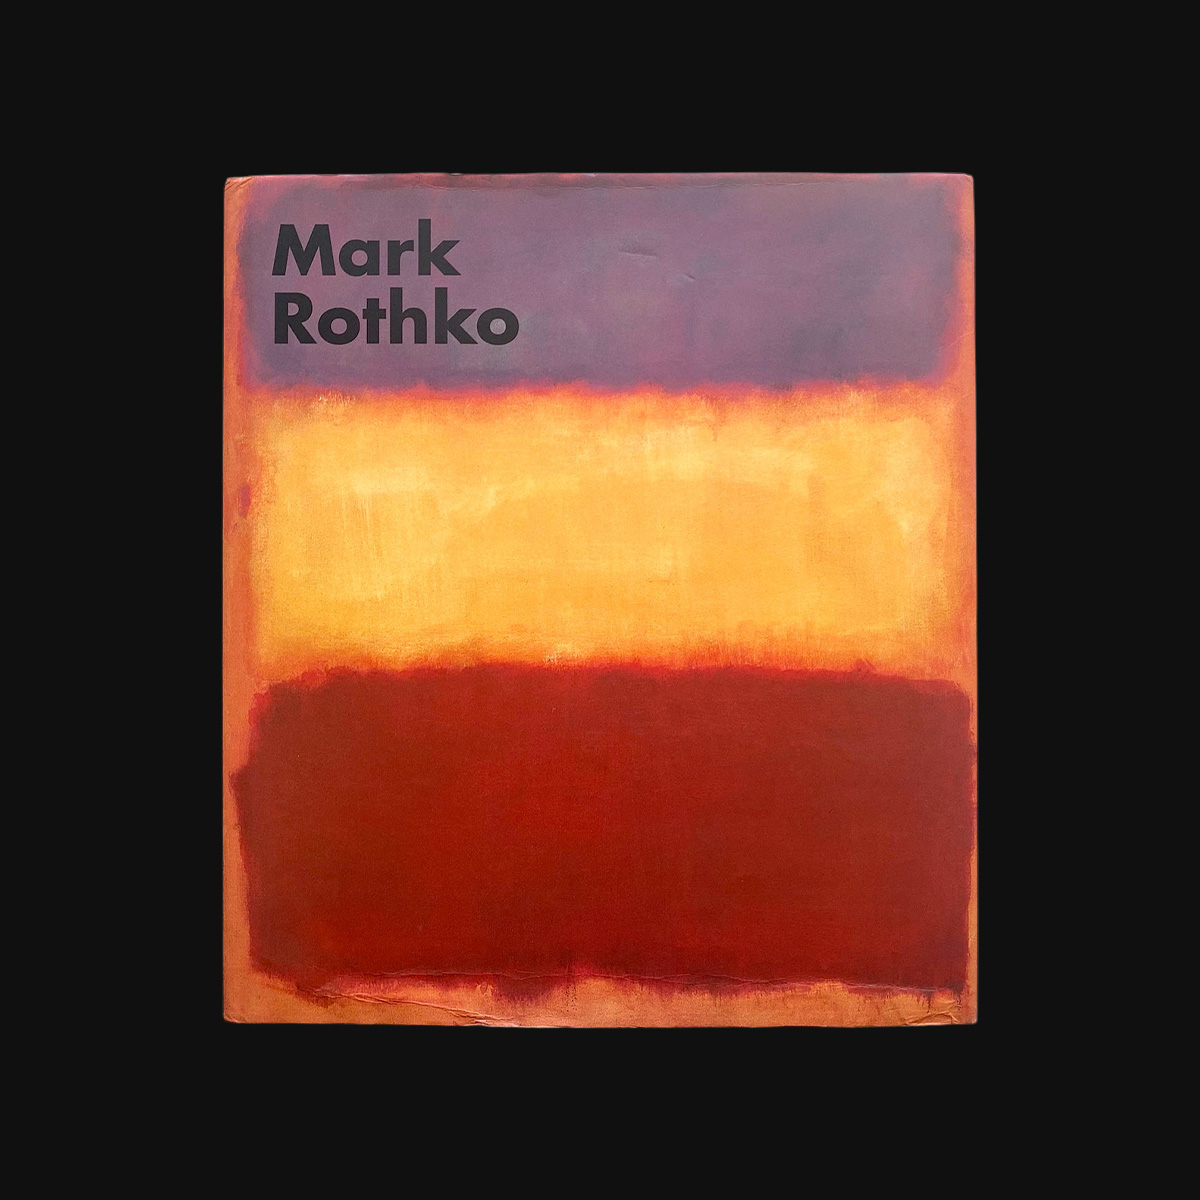 Mark Rothko’s Book of Art